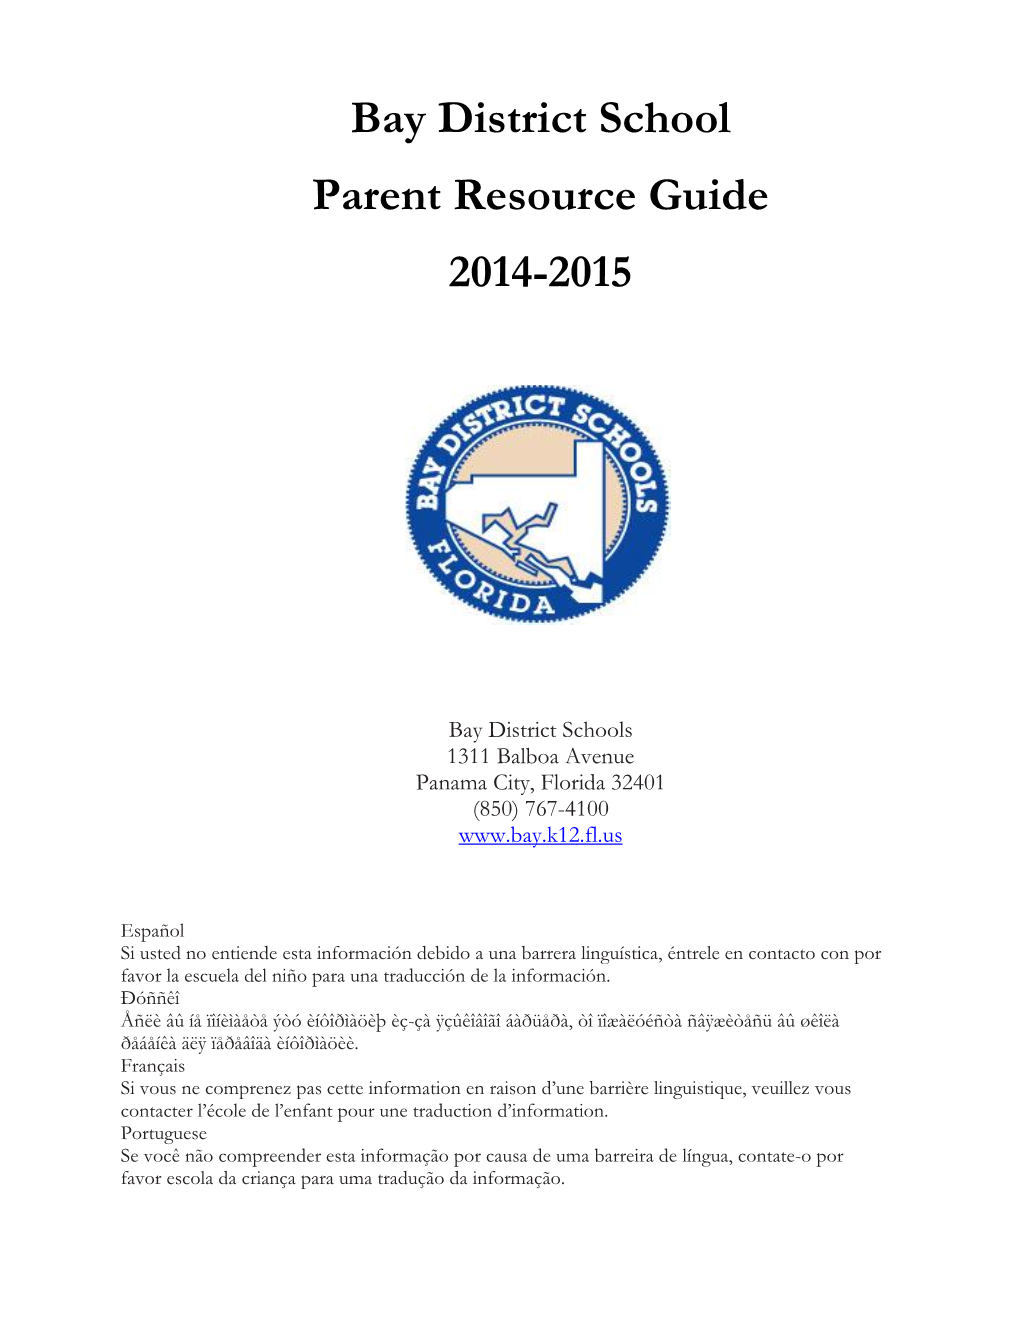 Bay District School Parent Resource Guide 2014-2015